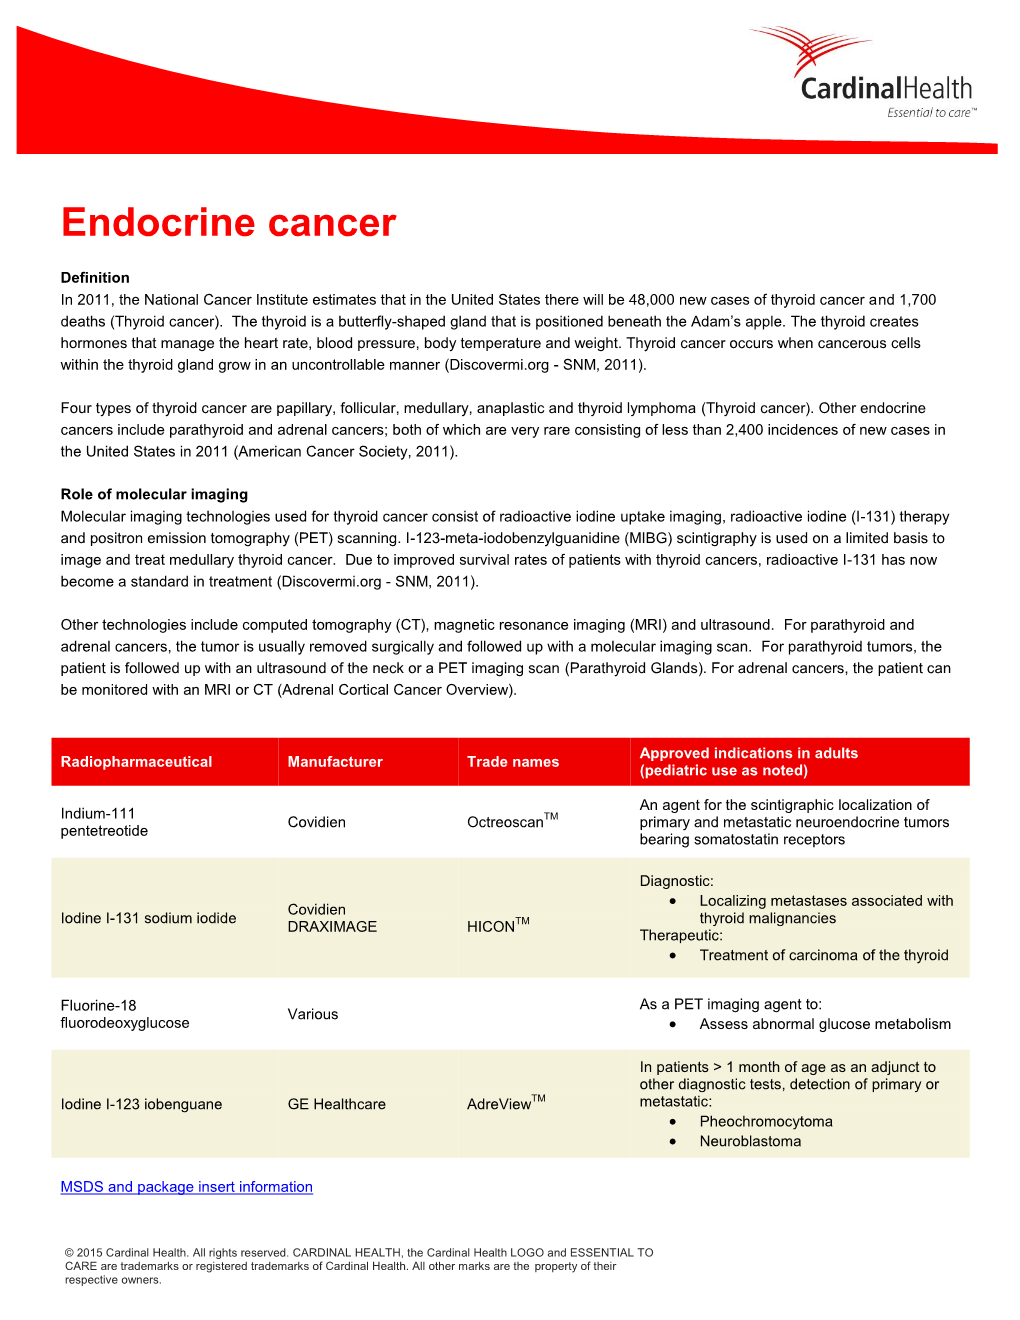 Nuclear Medicine: Endocrine Cancer